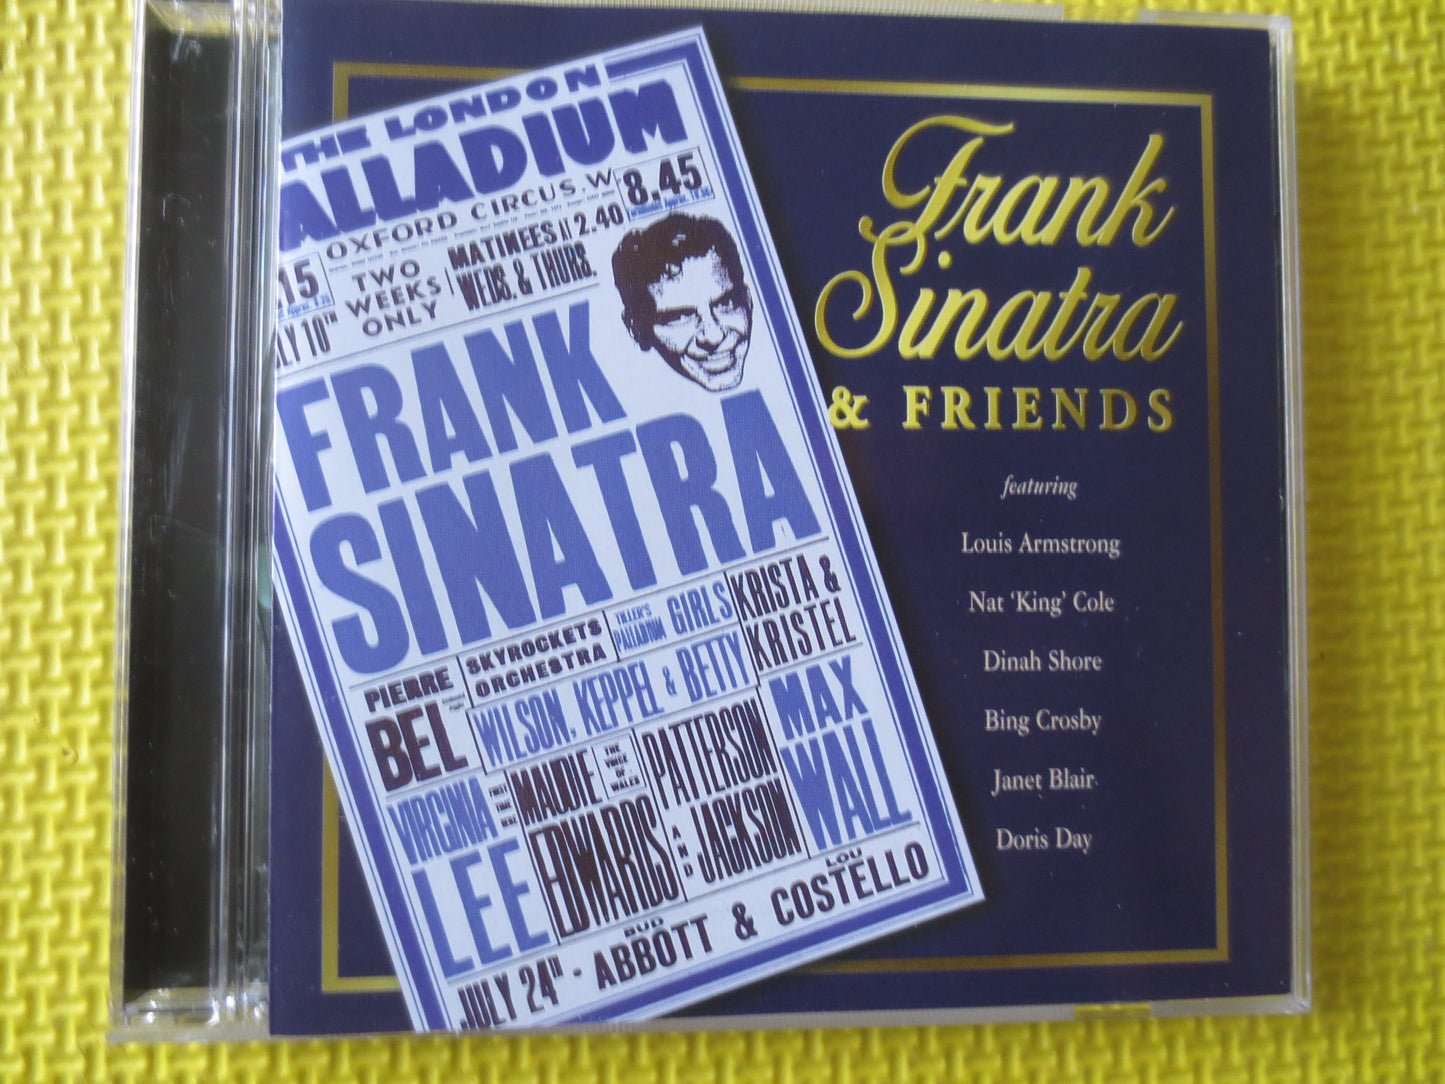 FRANK SINATRA, FRIENDS, Frank Sinatra Cd, Greatest Hits Cd, Jazz Cd, Jazz Lp, Vintage Compact Disc, Jazz Compact Discs